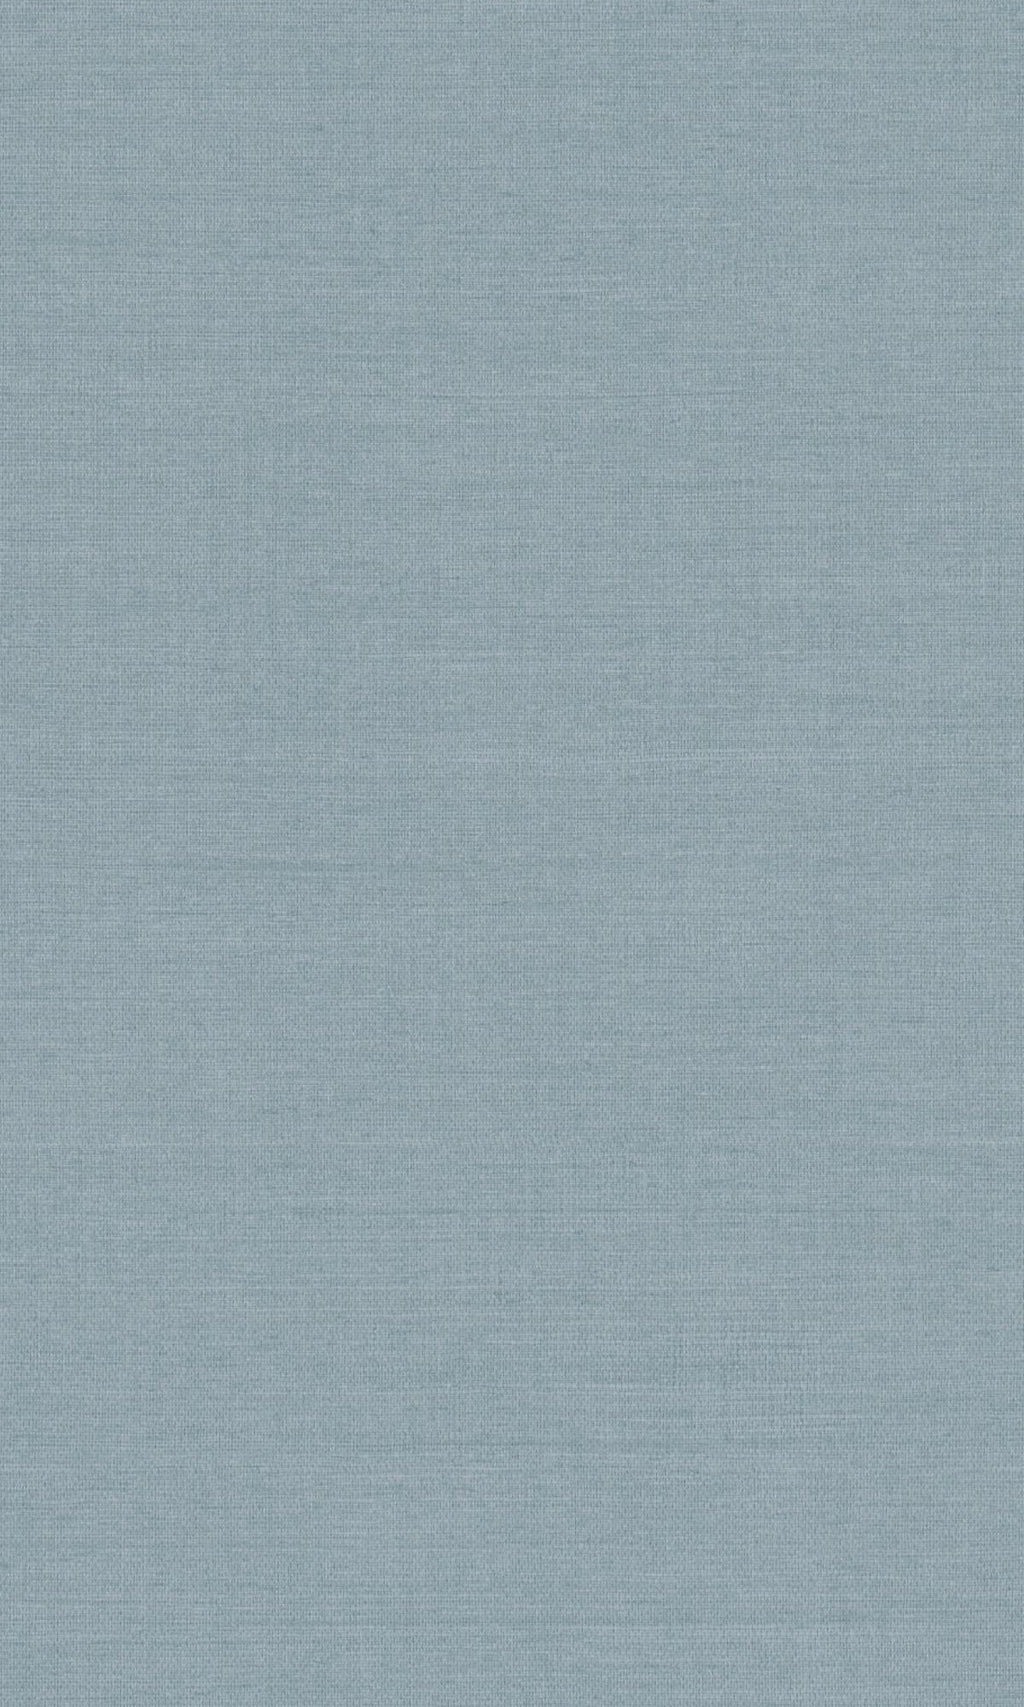 Sky Blue Minimalist Weave Textured Wallpaper C7260